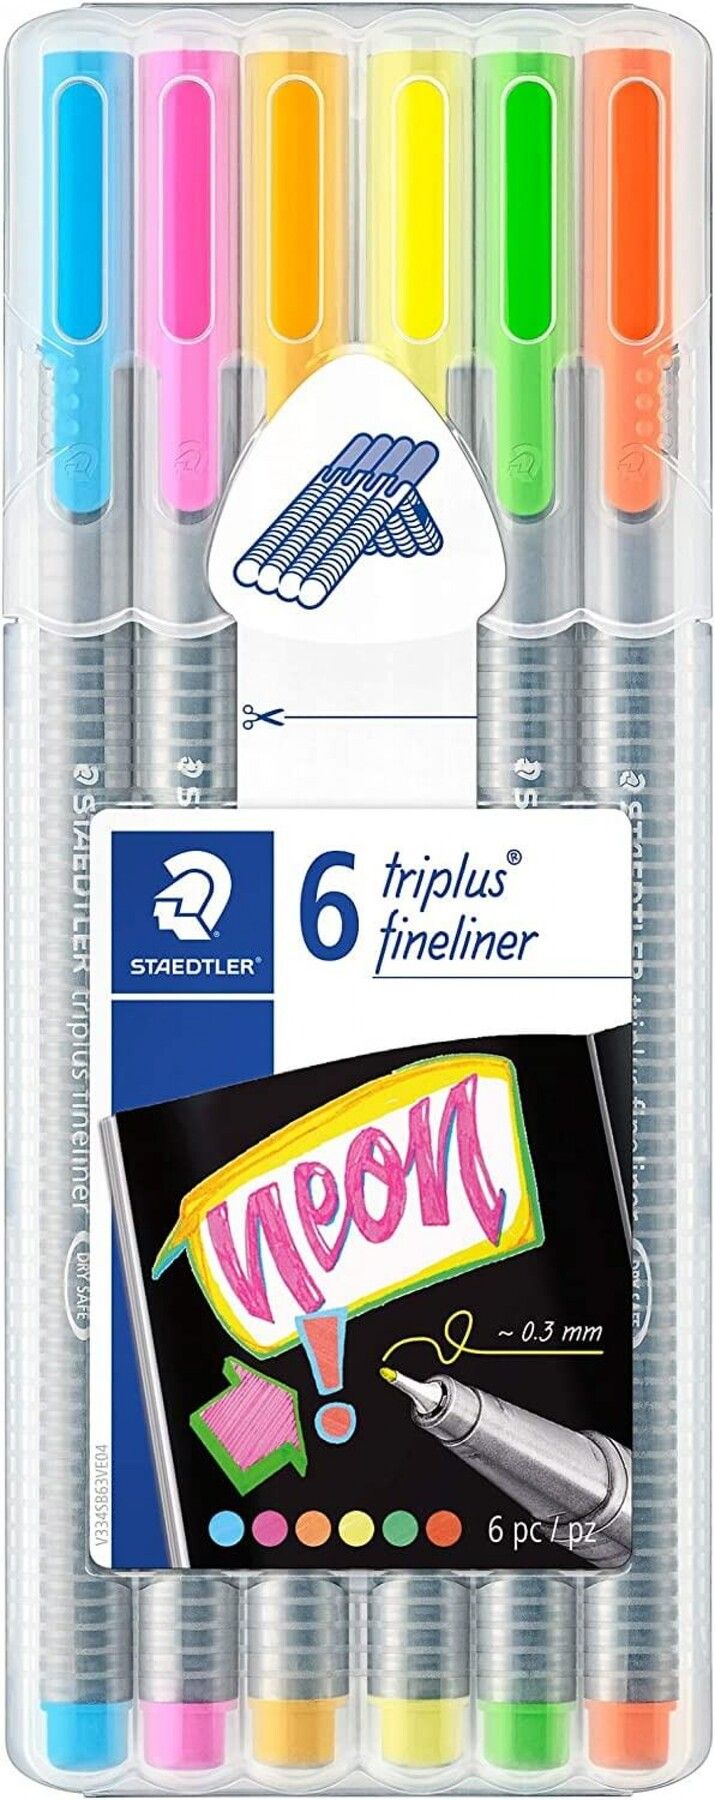 Staedtler Triplus 6'lı 0.3mm Üçgen Fineliner Neon Kalem Seti / Sb6cs3